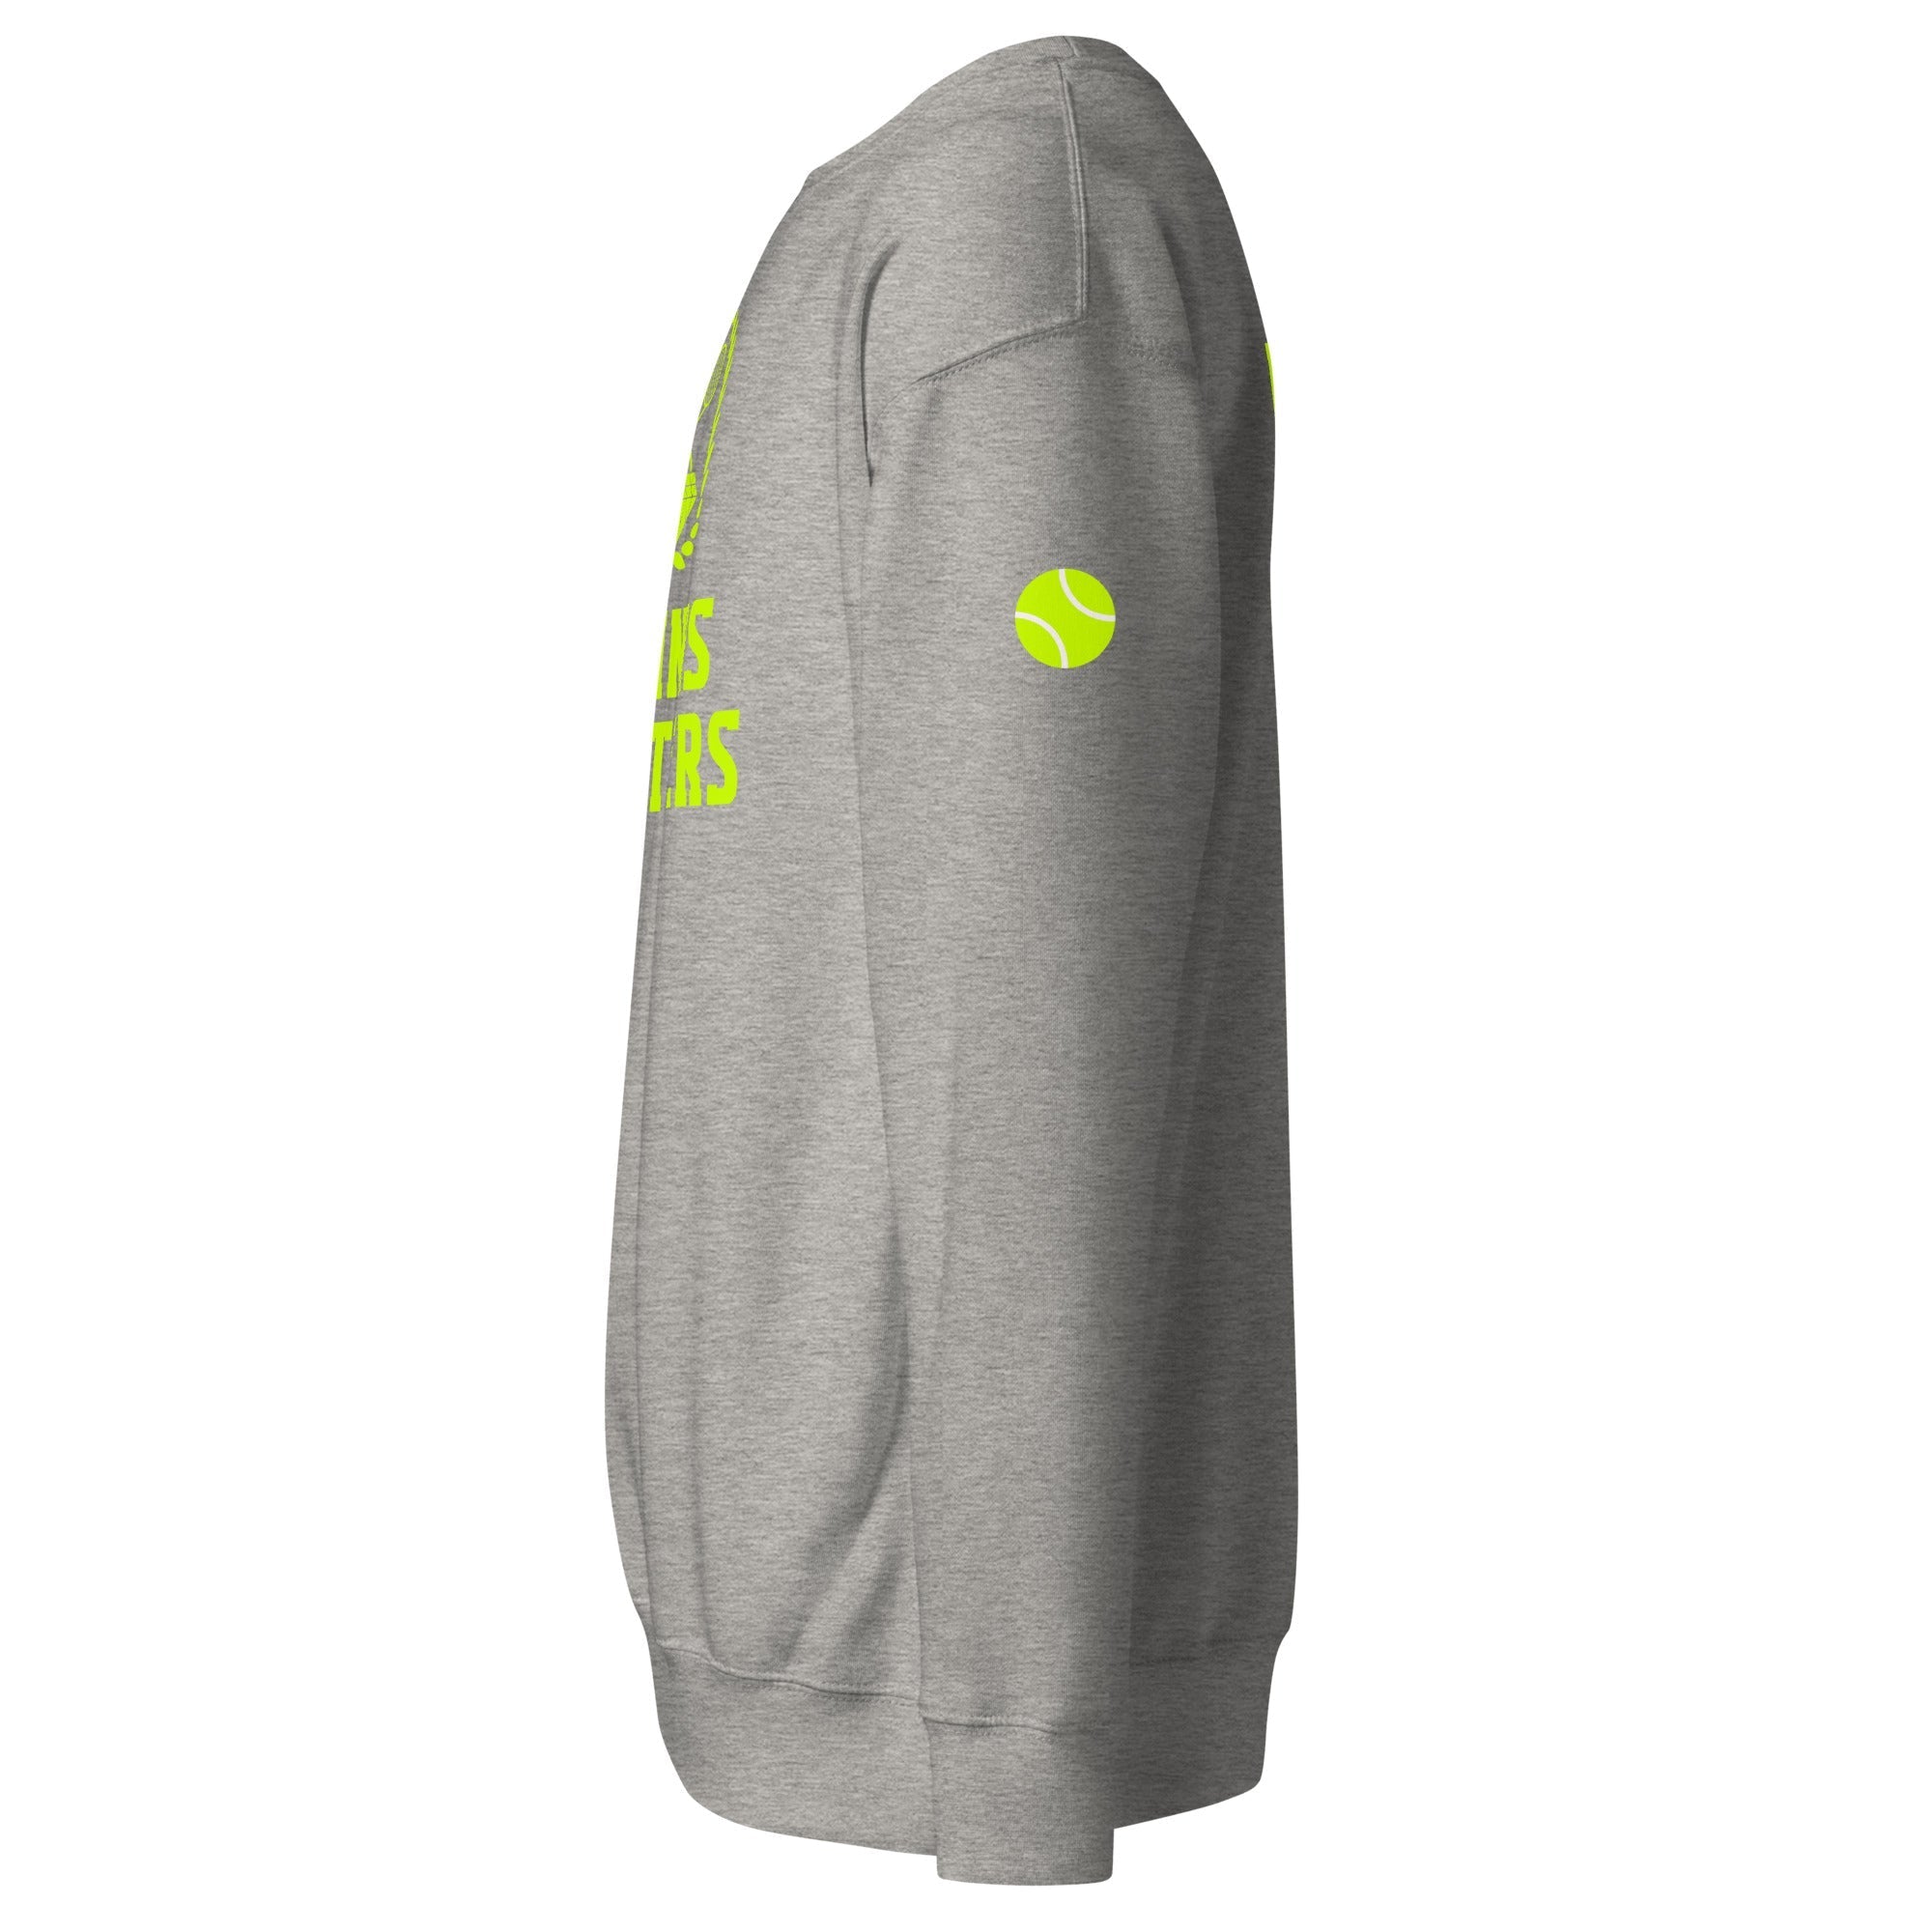 Unisex Premium Sweatshirt - Tennis Masters Rome - GRAPHIC T-SHIRTS